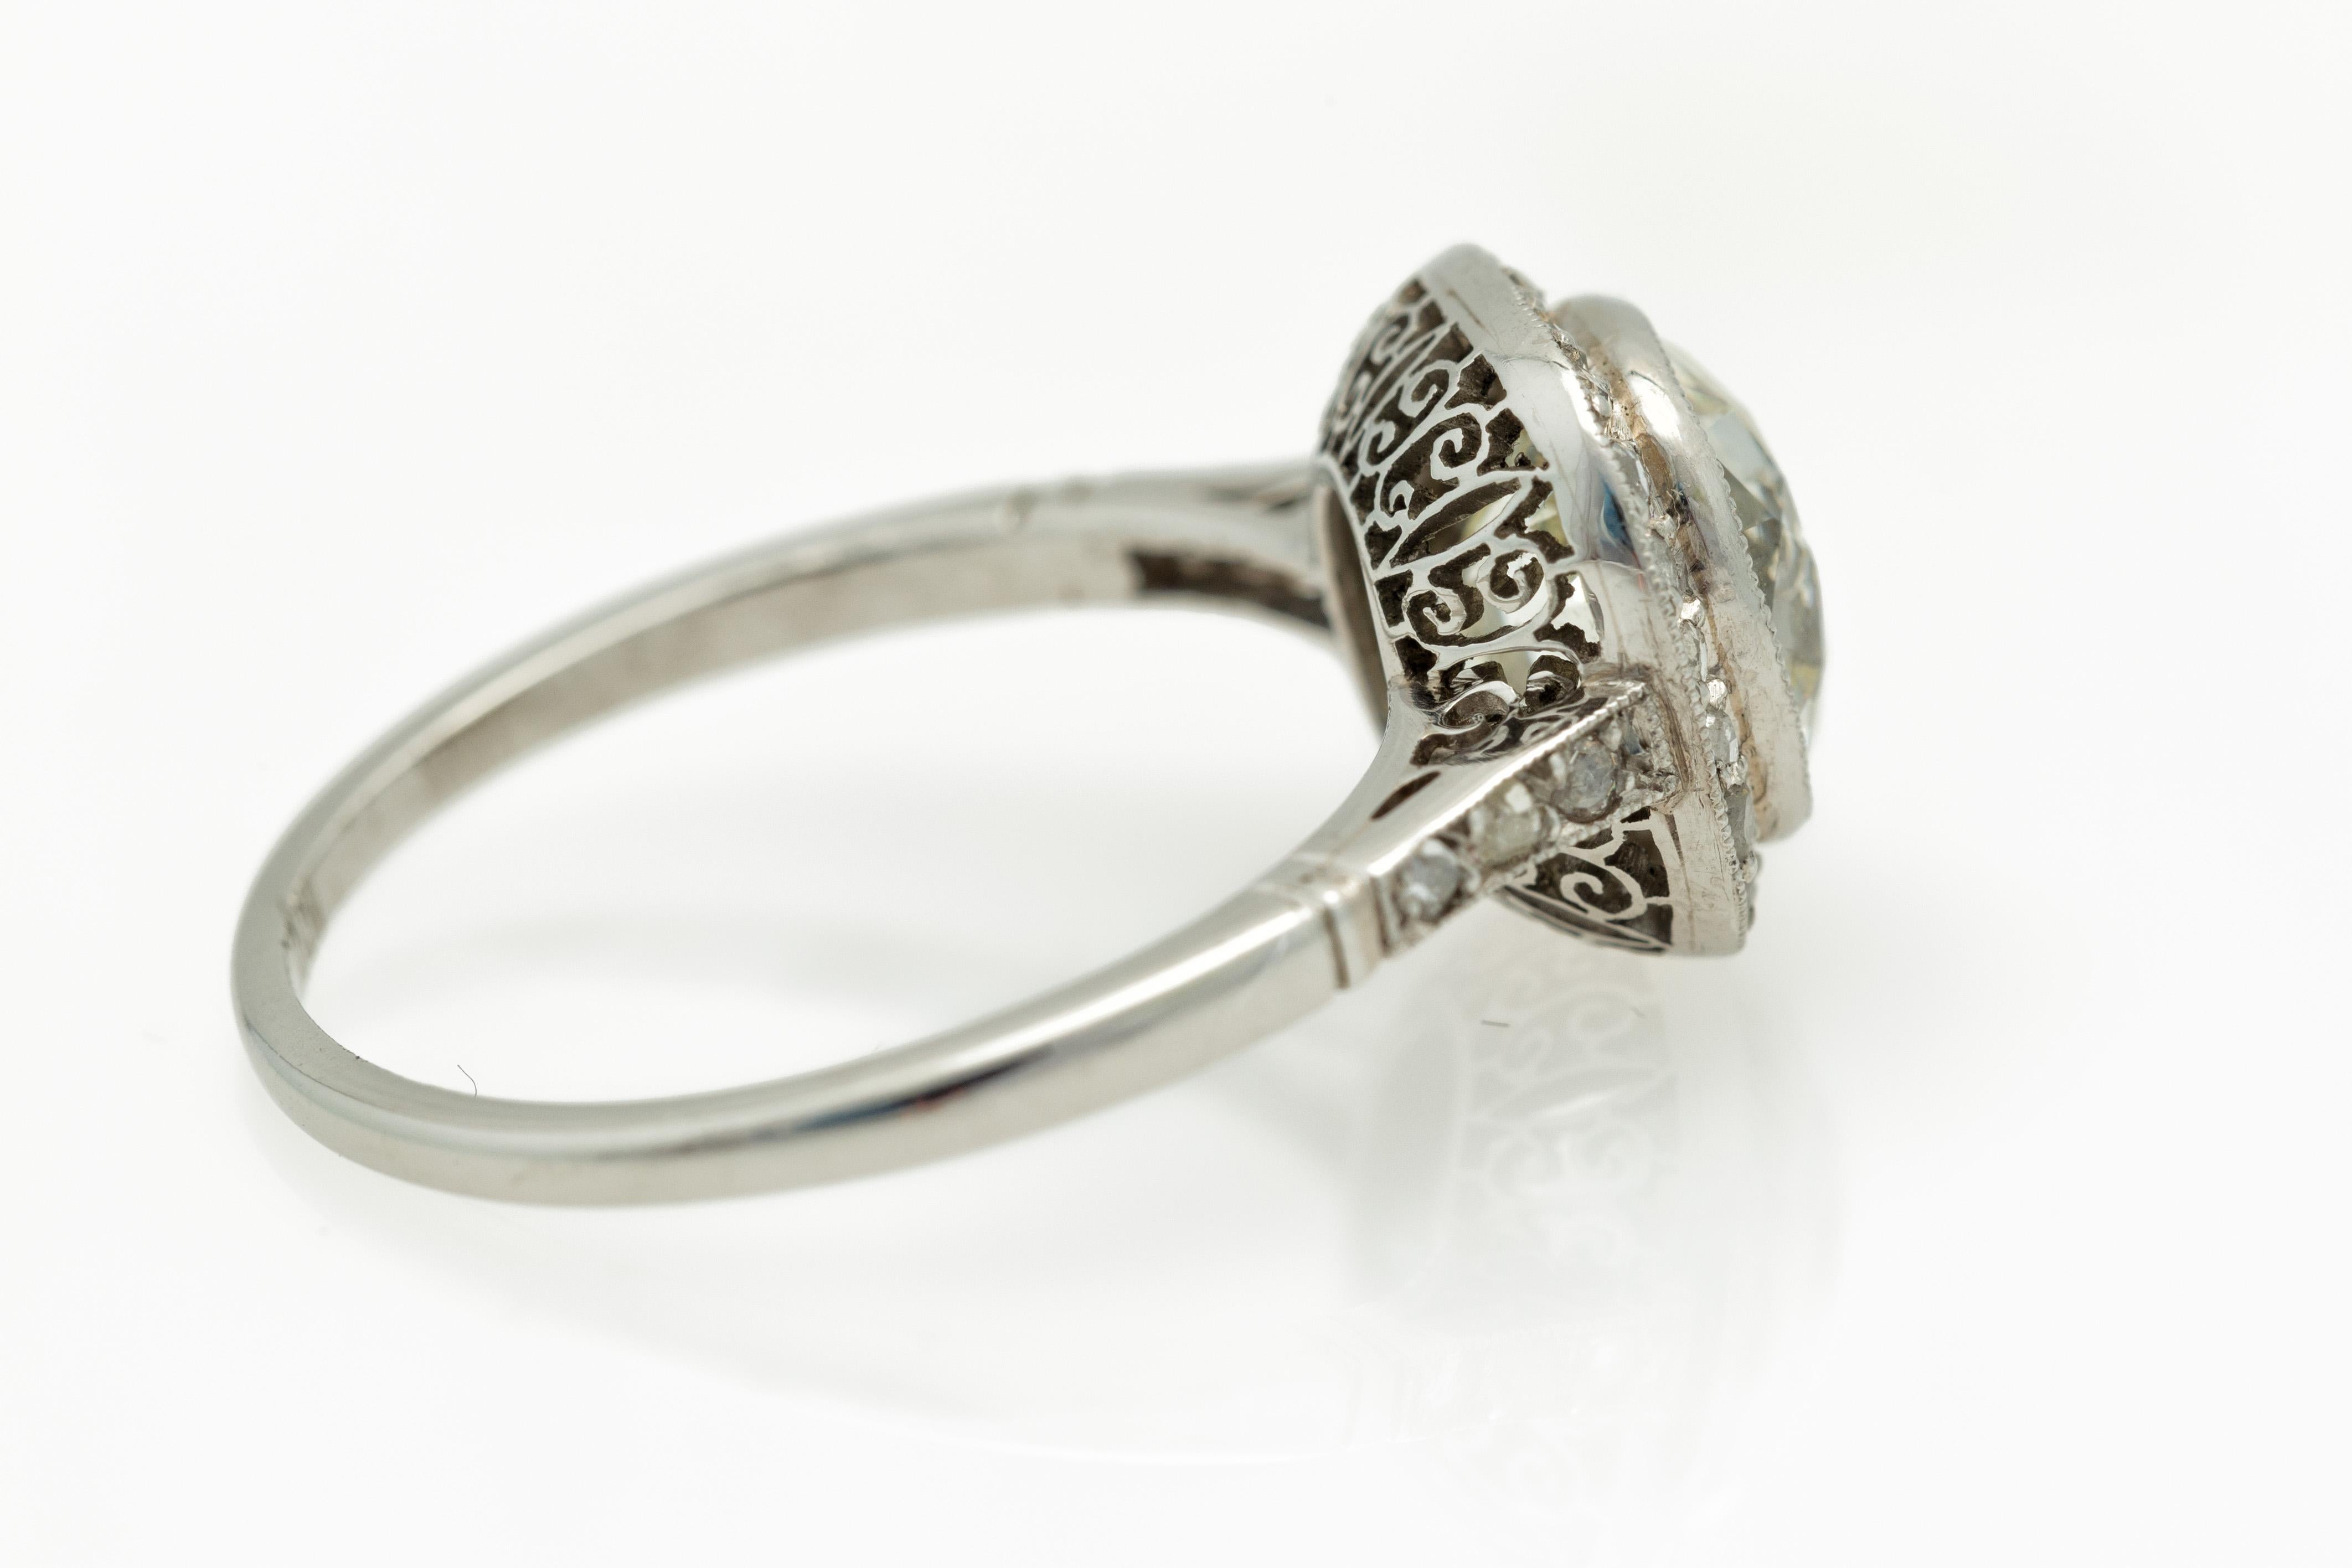 Italian 1950s Art Deco Revival 2.64 Carat Cushion Cut Diamond Ring in Platinum 3